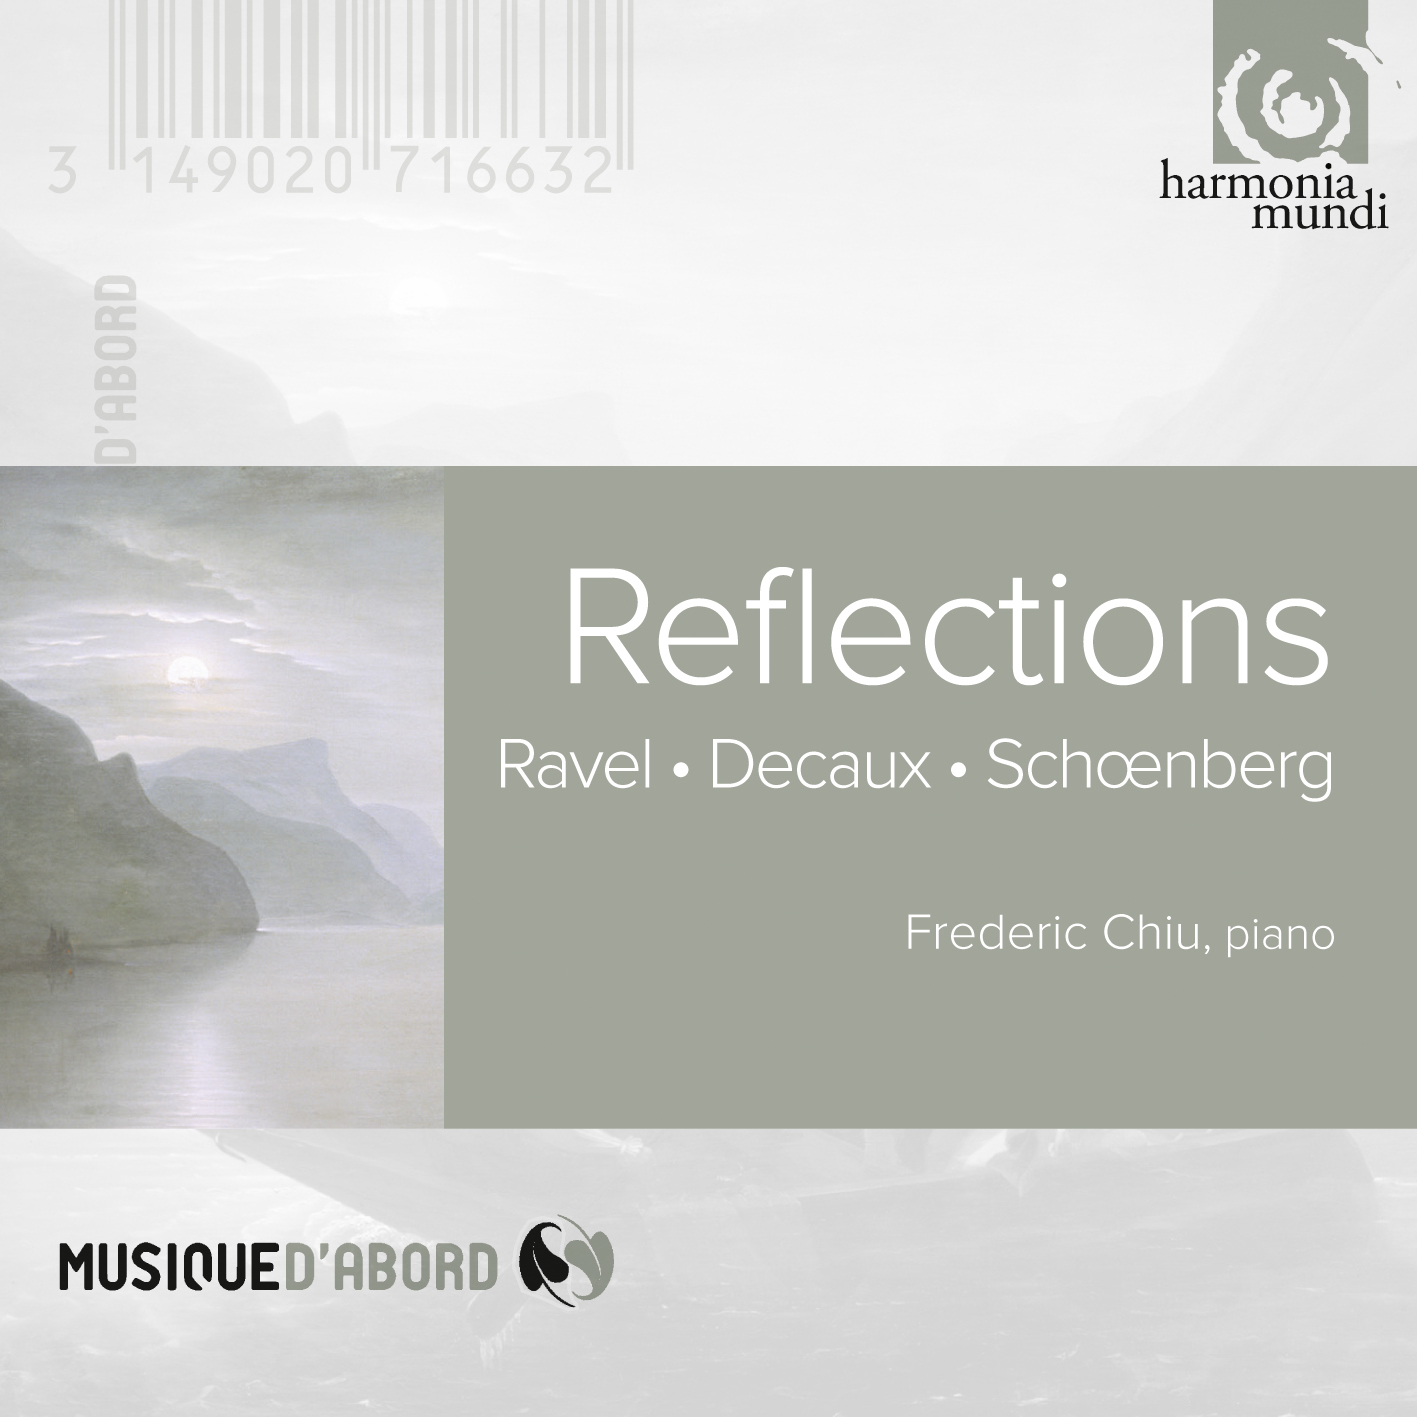 Ravel, Decaux, Sch nberg: Reflections